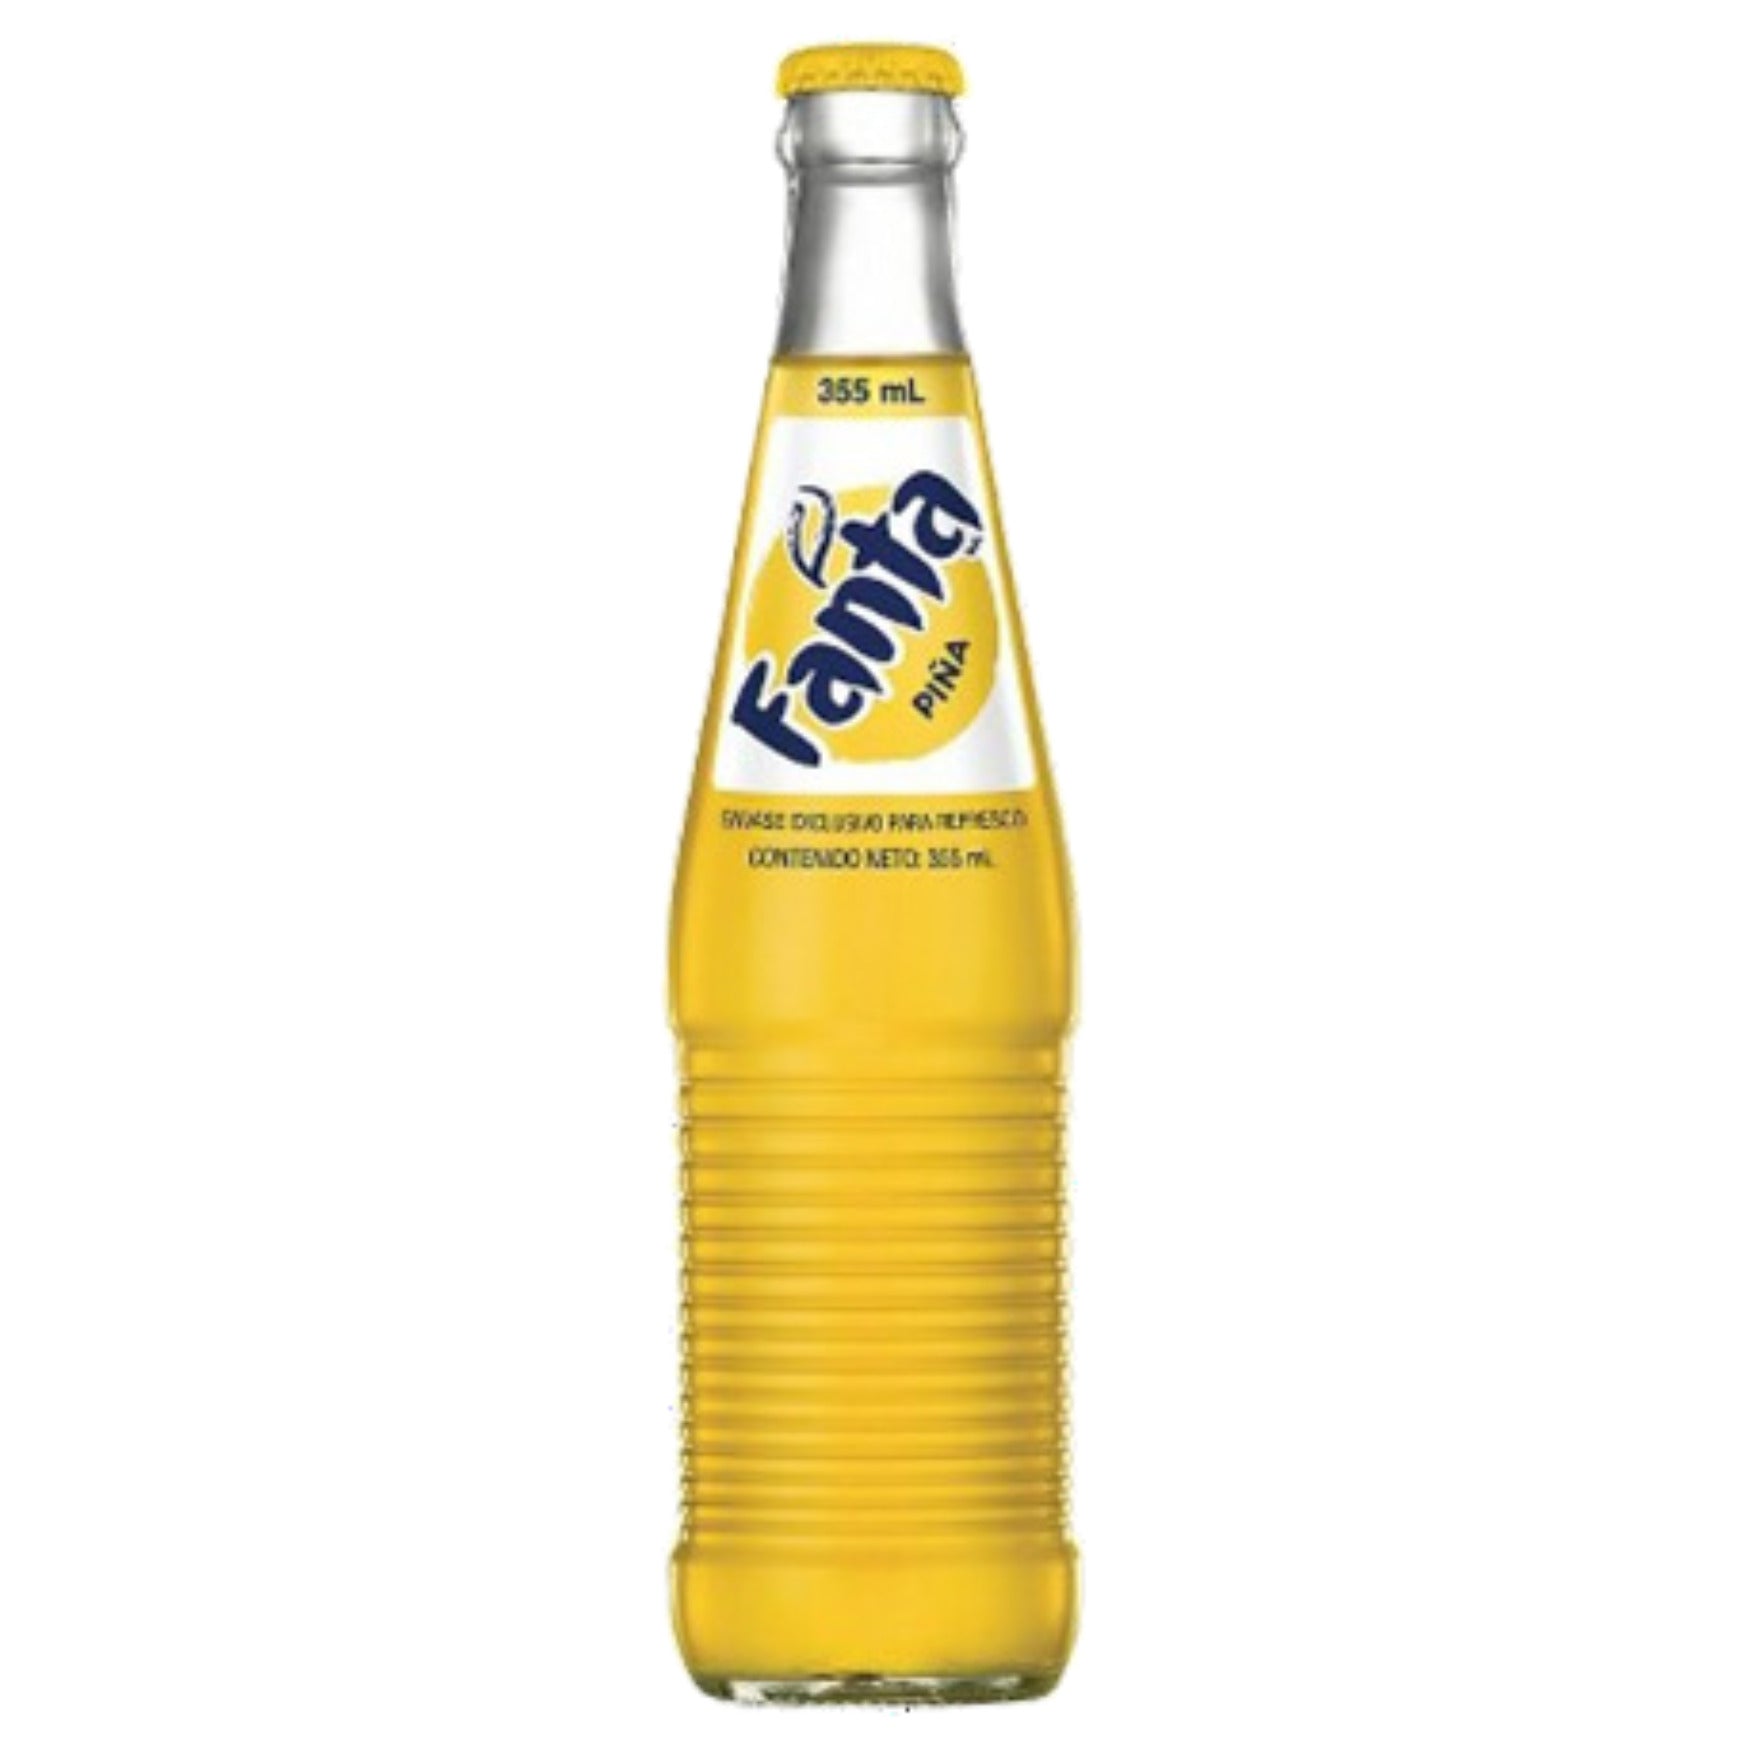 Fanta Mexican Pineapple Soda (355ml)